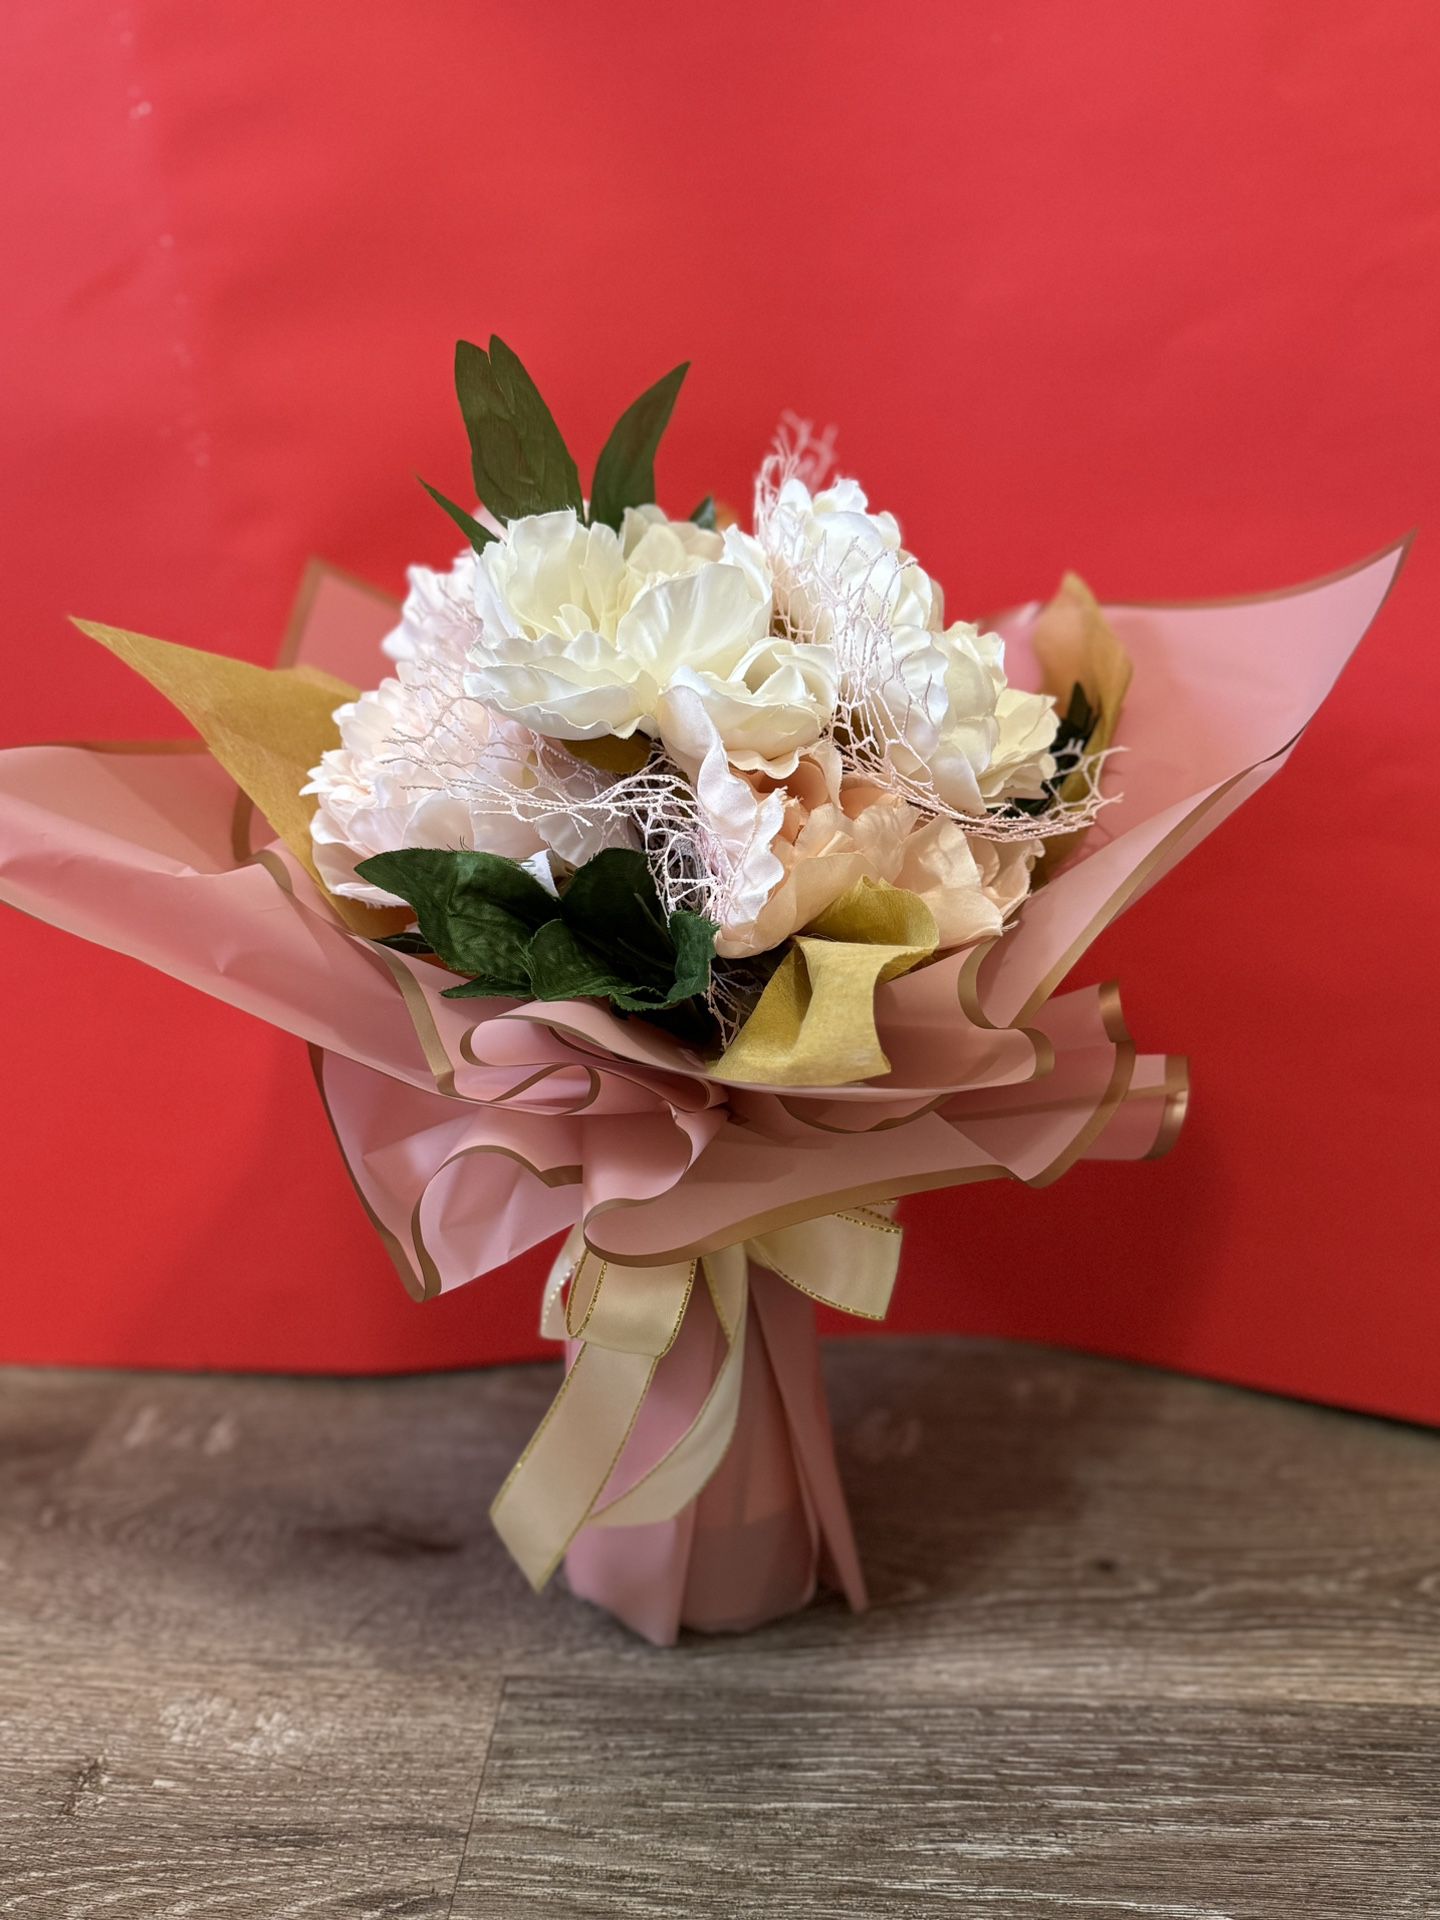 Birthday Or Graduation Gift: Flower Bouquet 